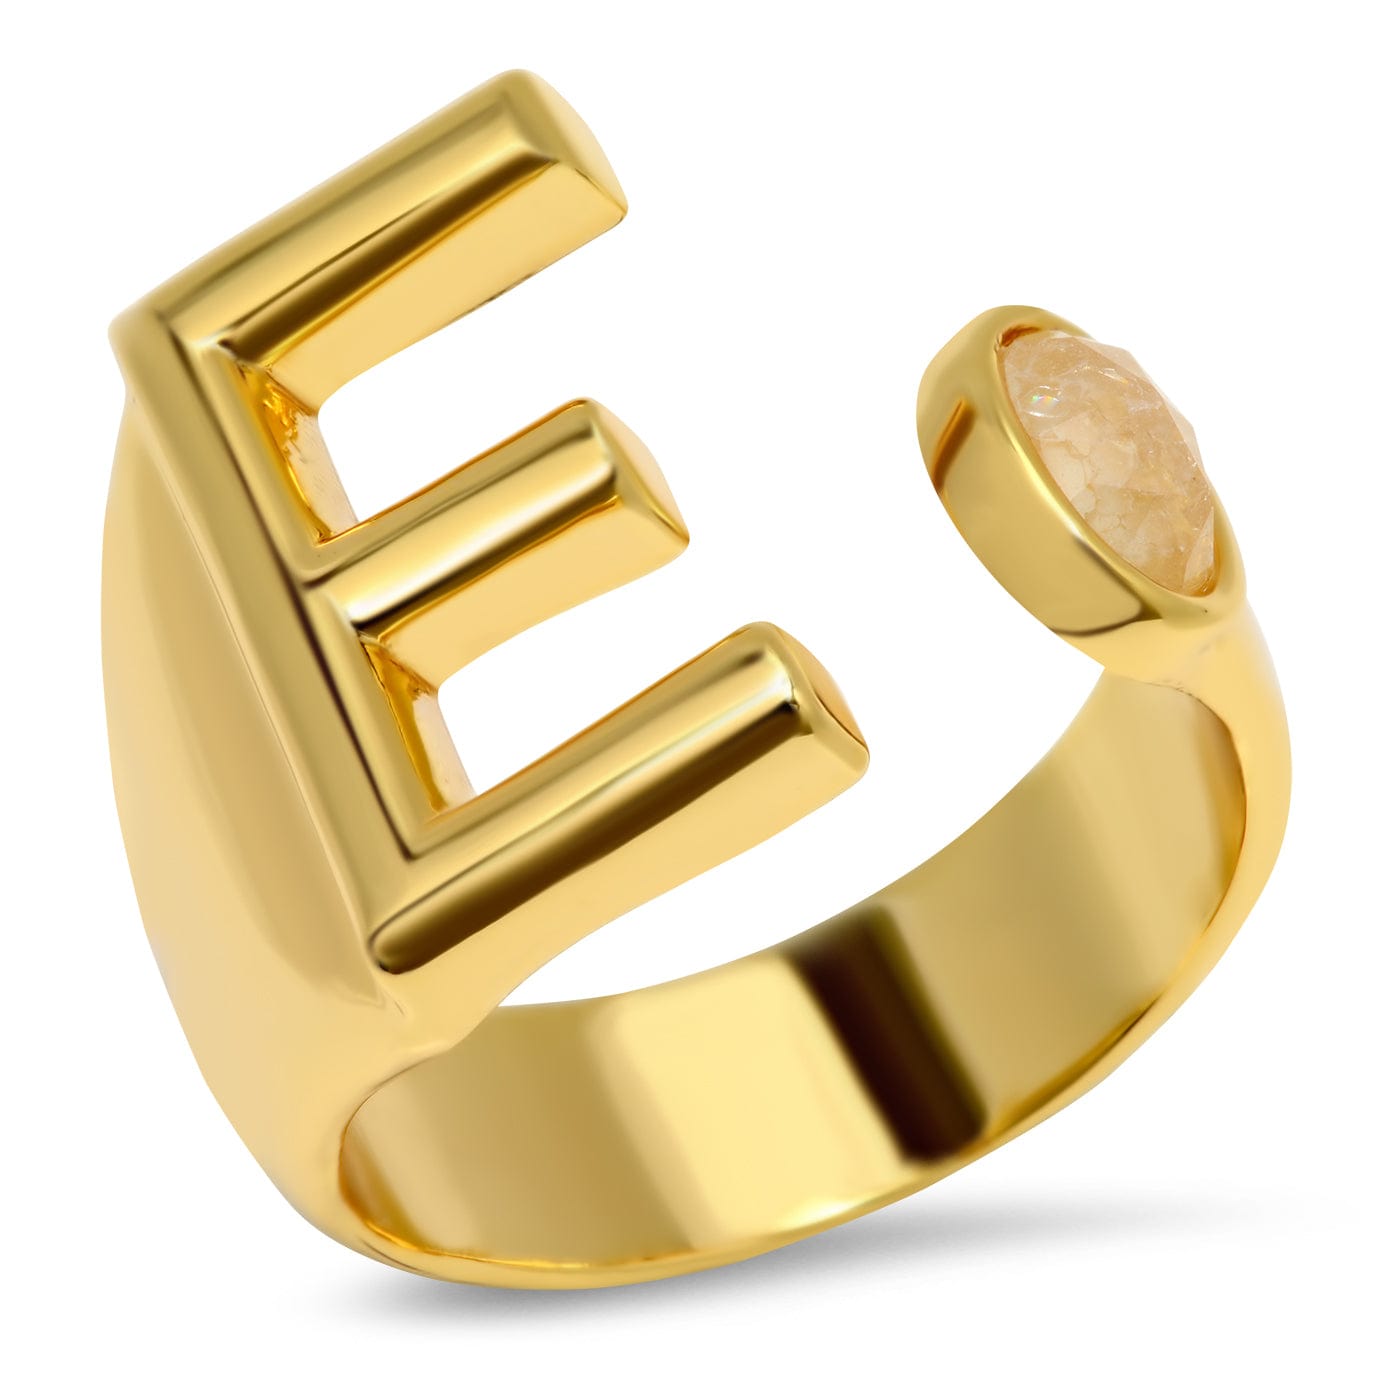 TAI JEWELRY Rings E Initial Wrap Ring